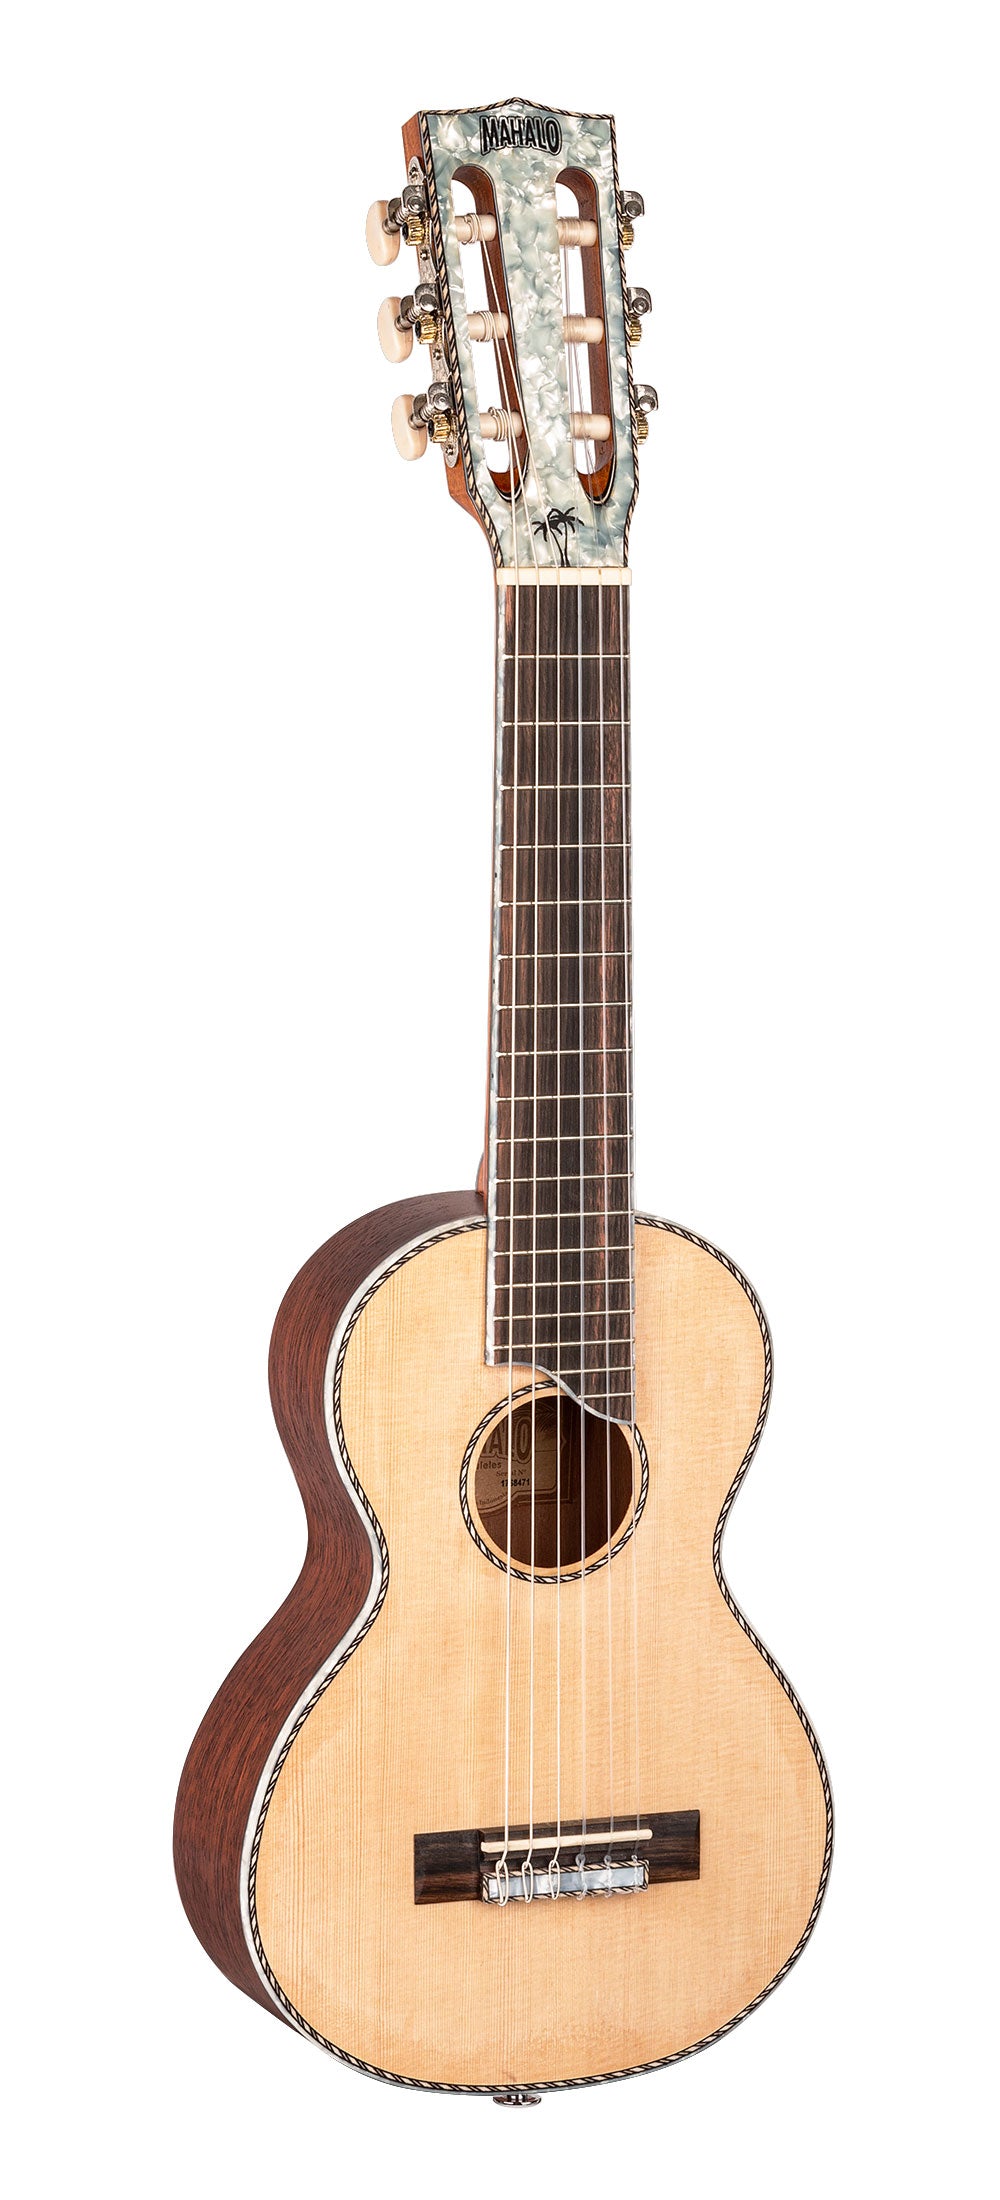 Mahalo Pearl Series Guitarlele MP5